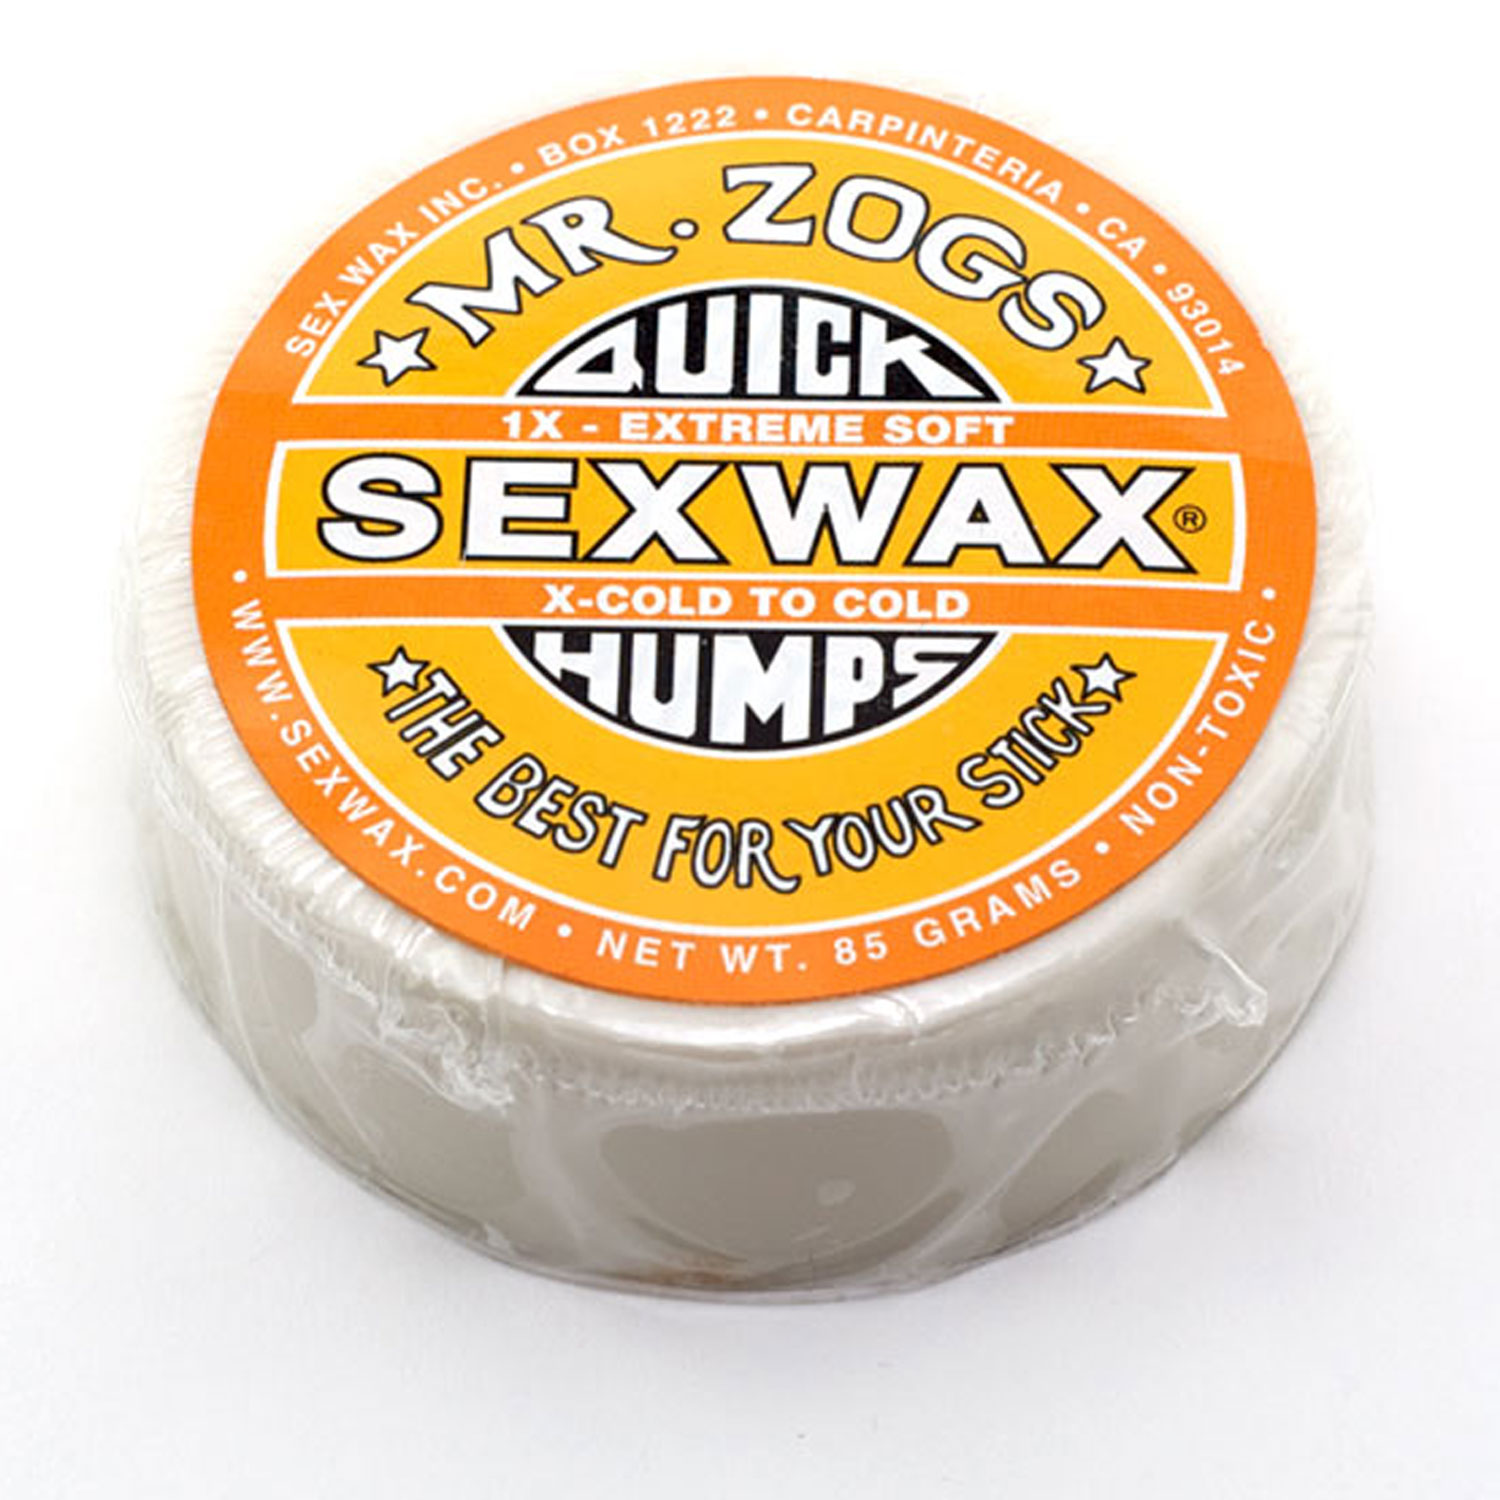 Sex Wax QUICK HUMPS 1X SURF WAX Pack of 2 Mr. Zogs.